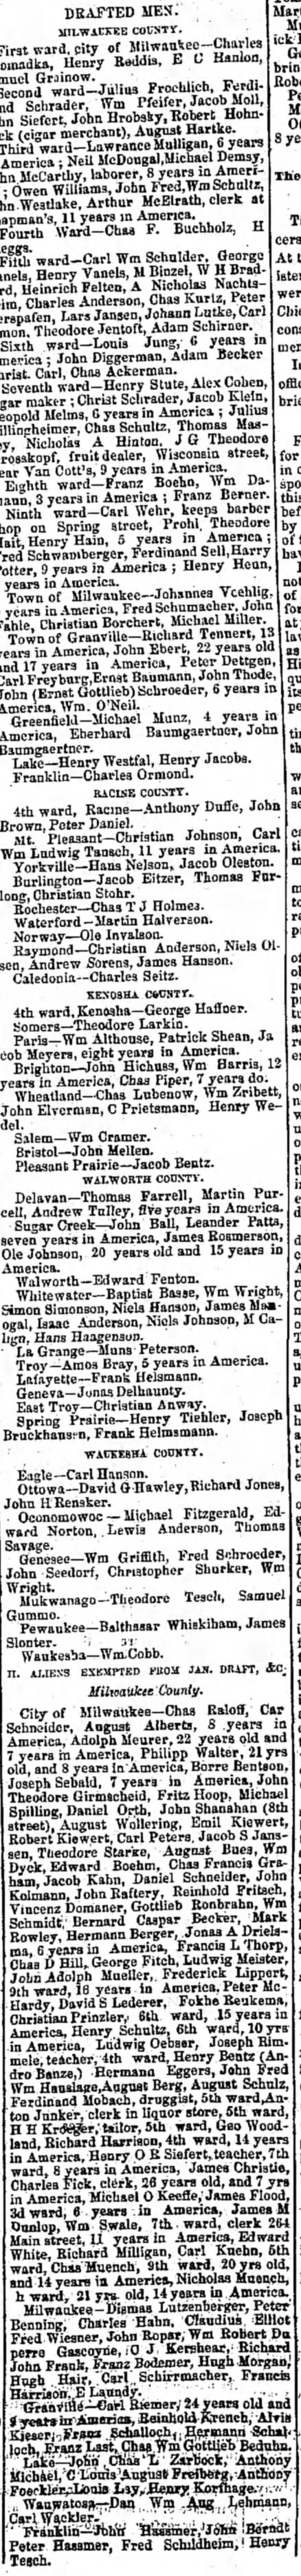 Drafted Civil War Dismas Lutzenberger
Semi-Weekly Wisconsin (Milw, WI) 9 Jan 1864, Saturday, page 2